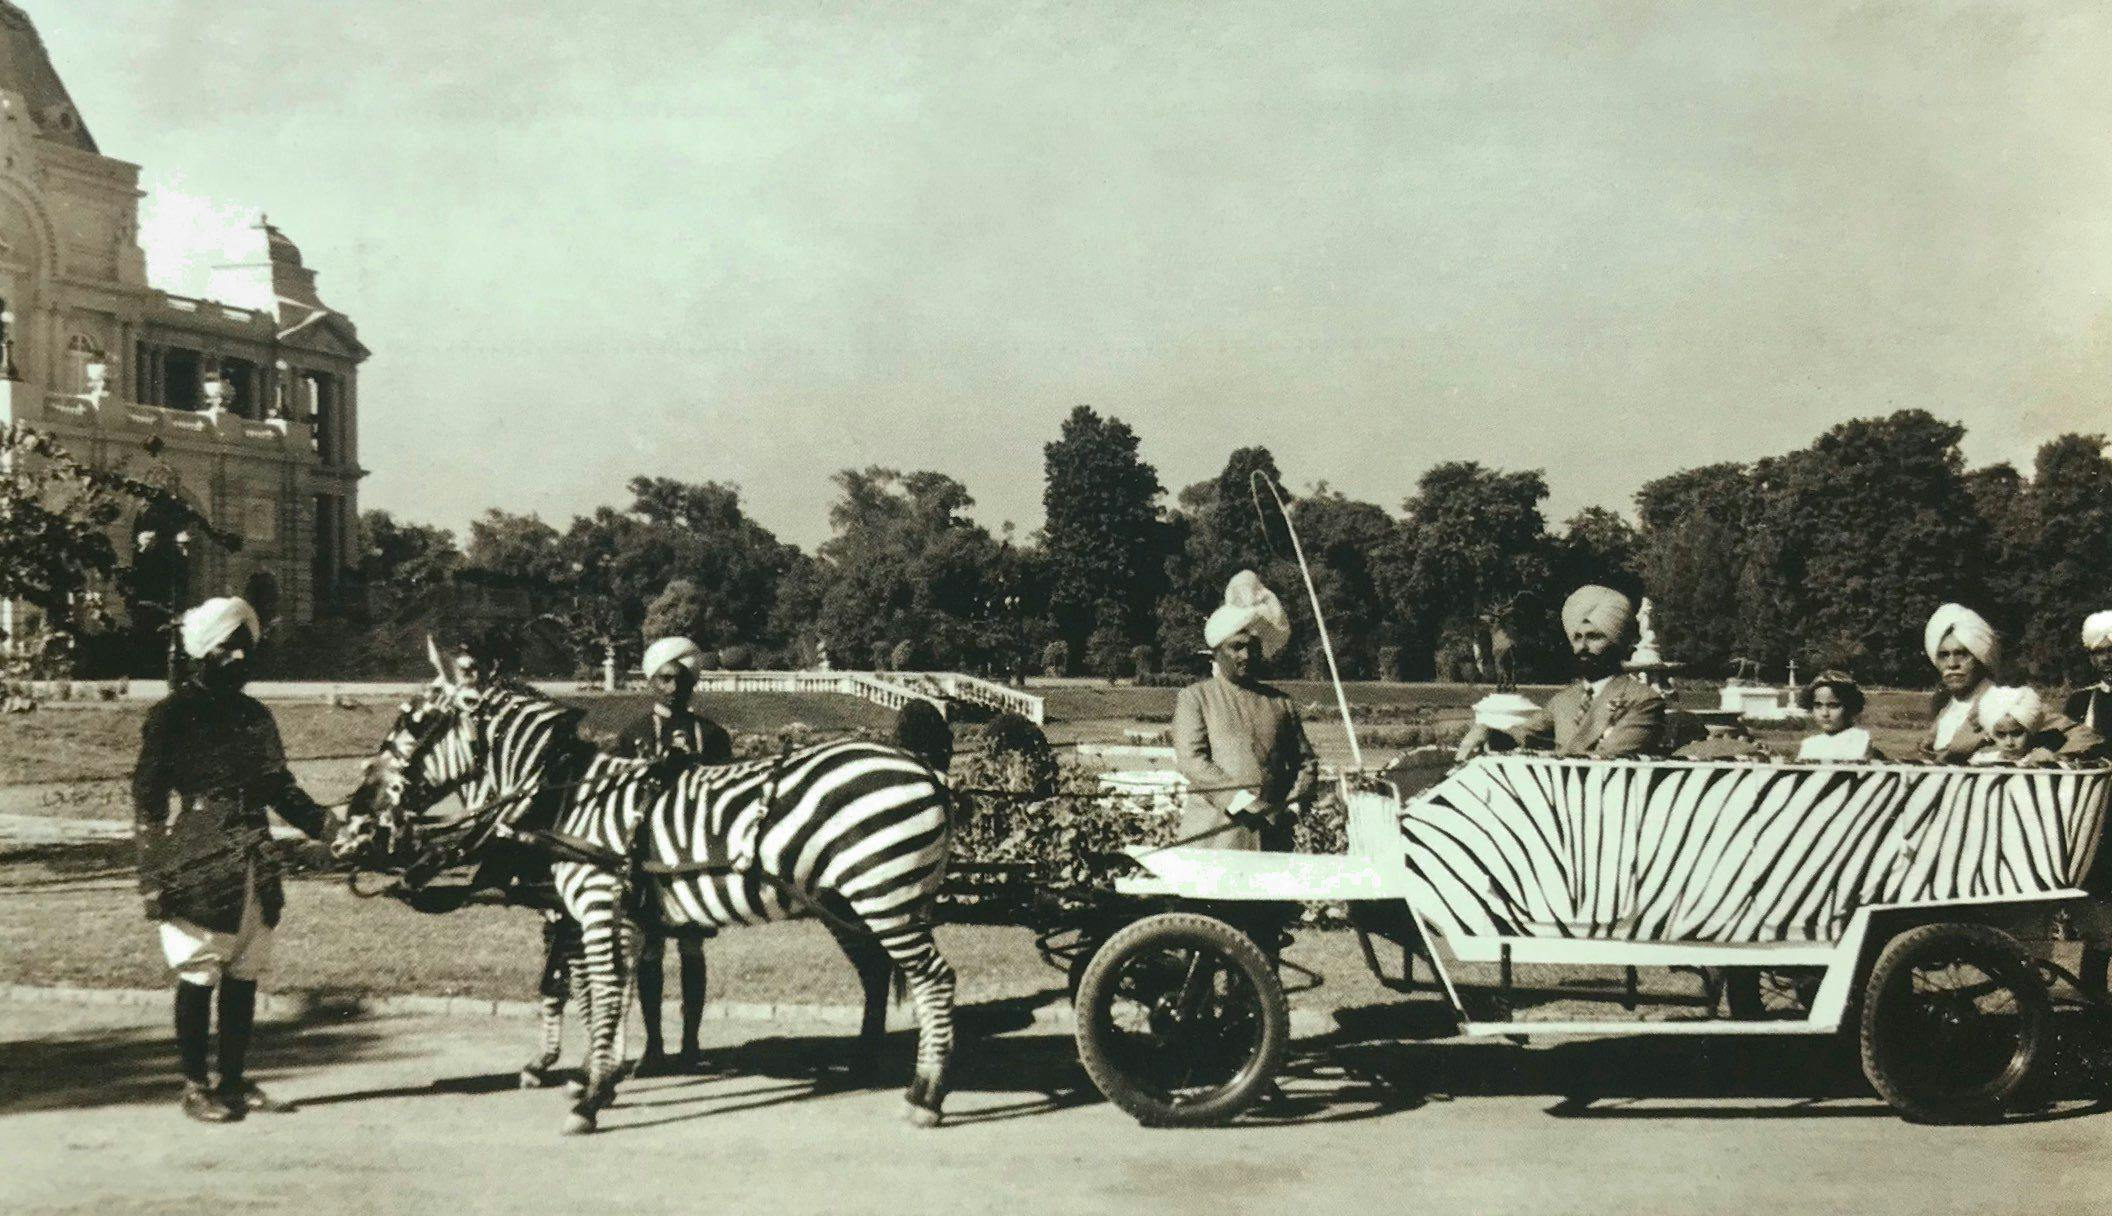 Maharaja riding with his grandchildren in a quaint zebra cart, c. 1936